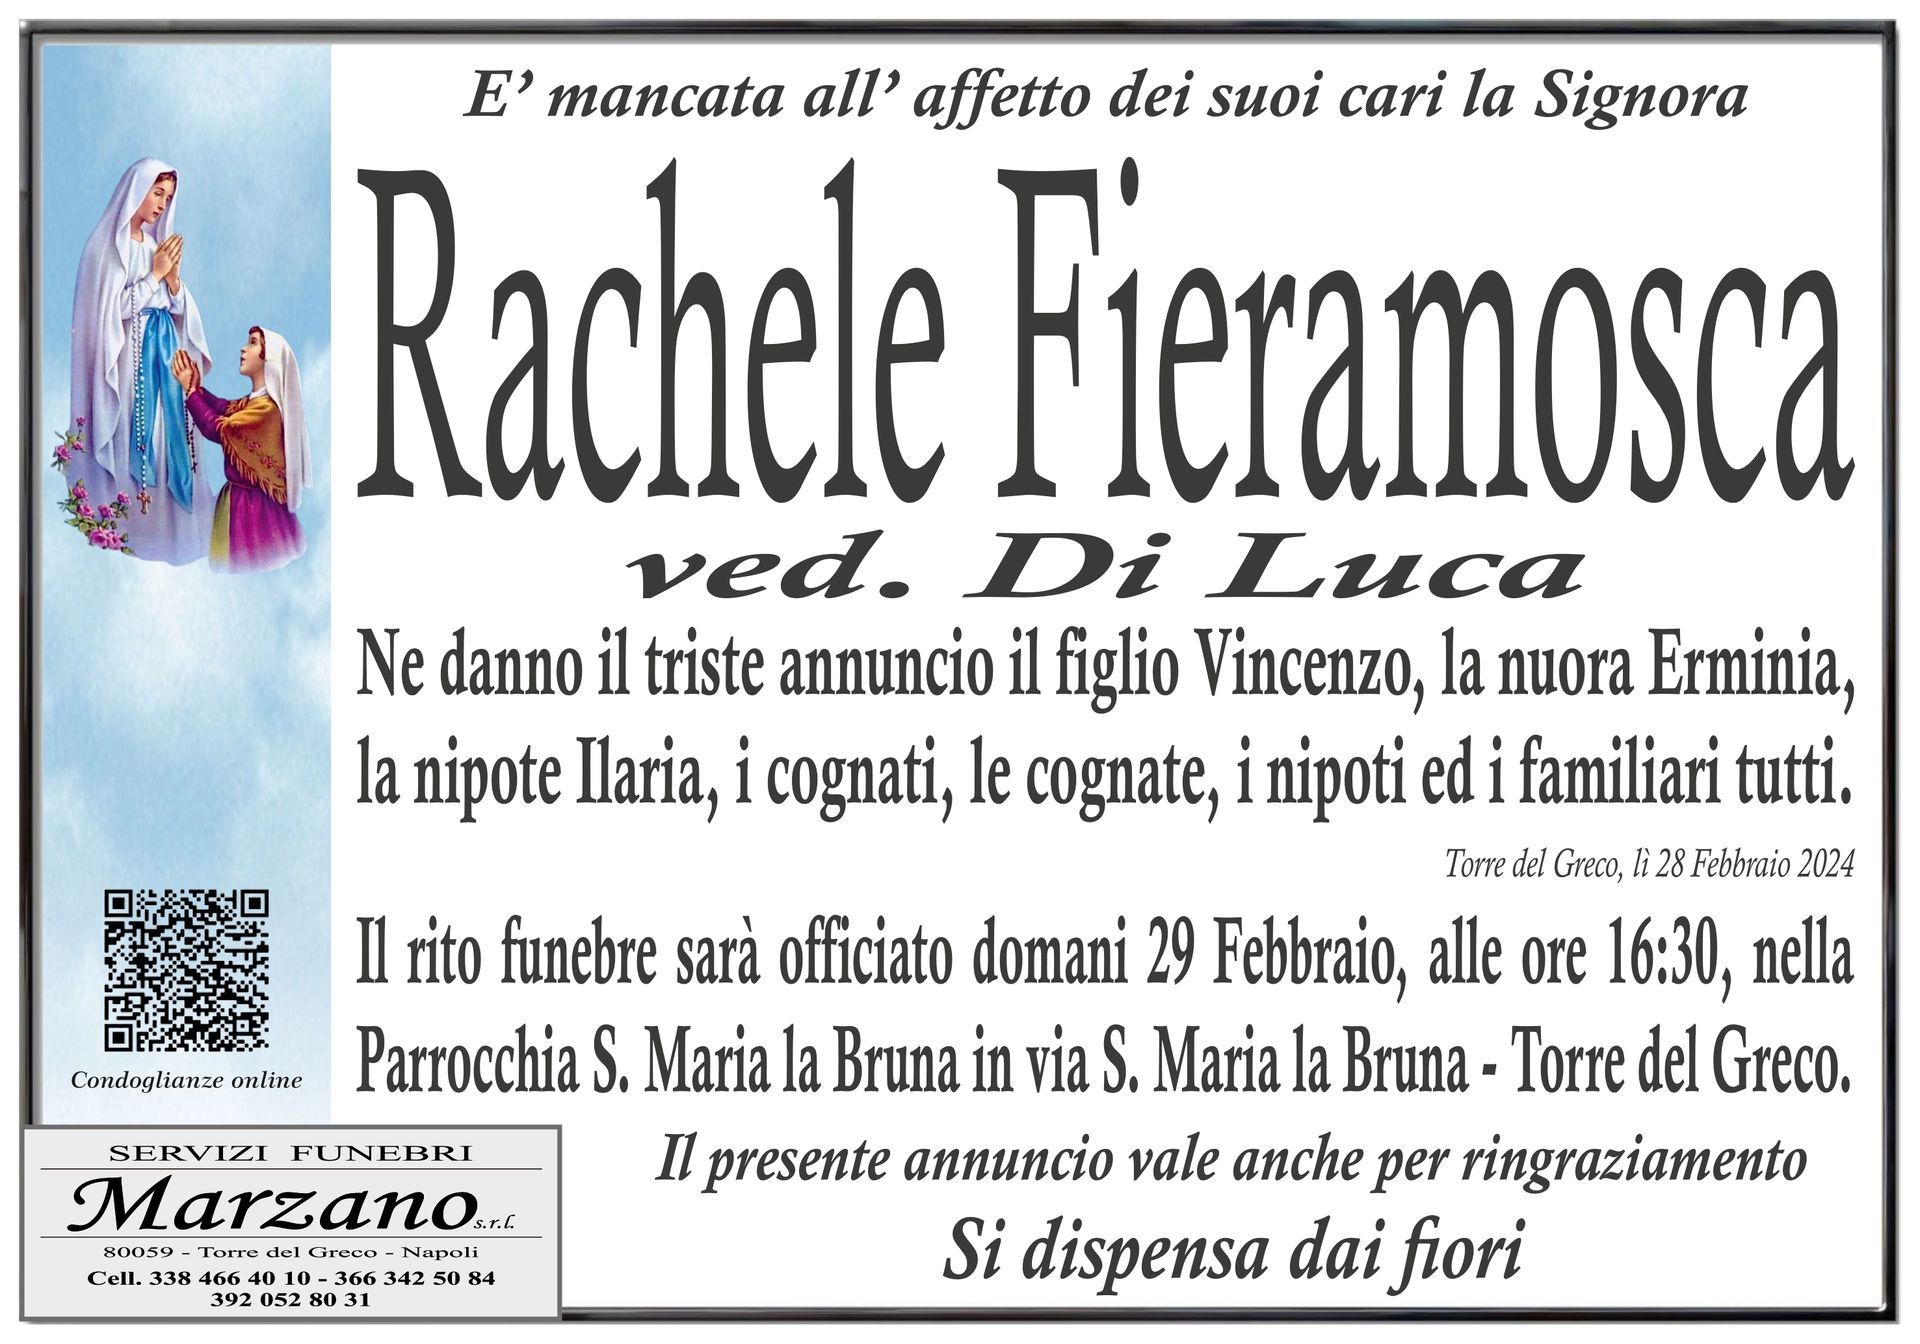 Rachele Fieramosca